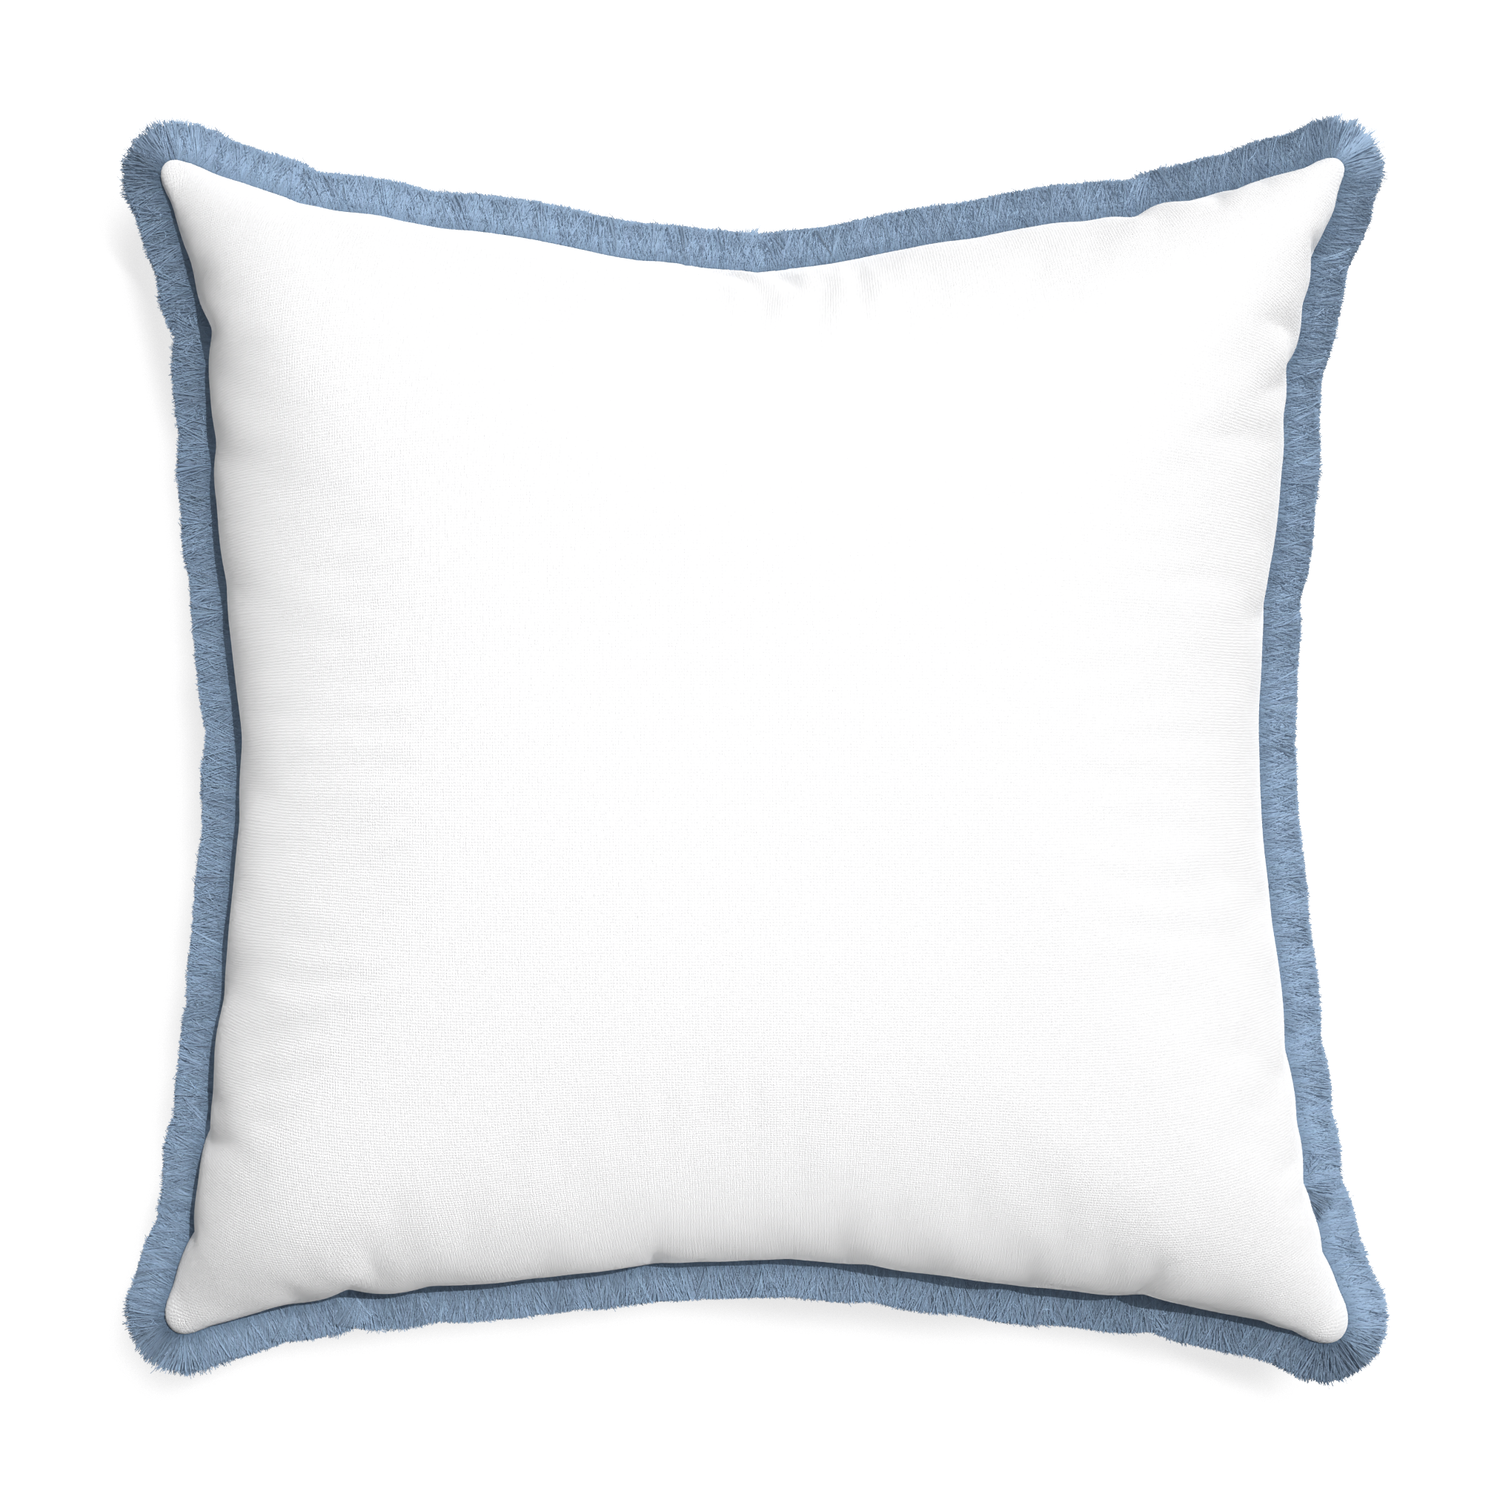 Euro-sham snow custom pillow with sky fringe on white background